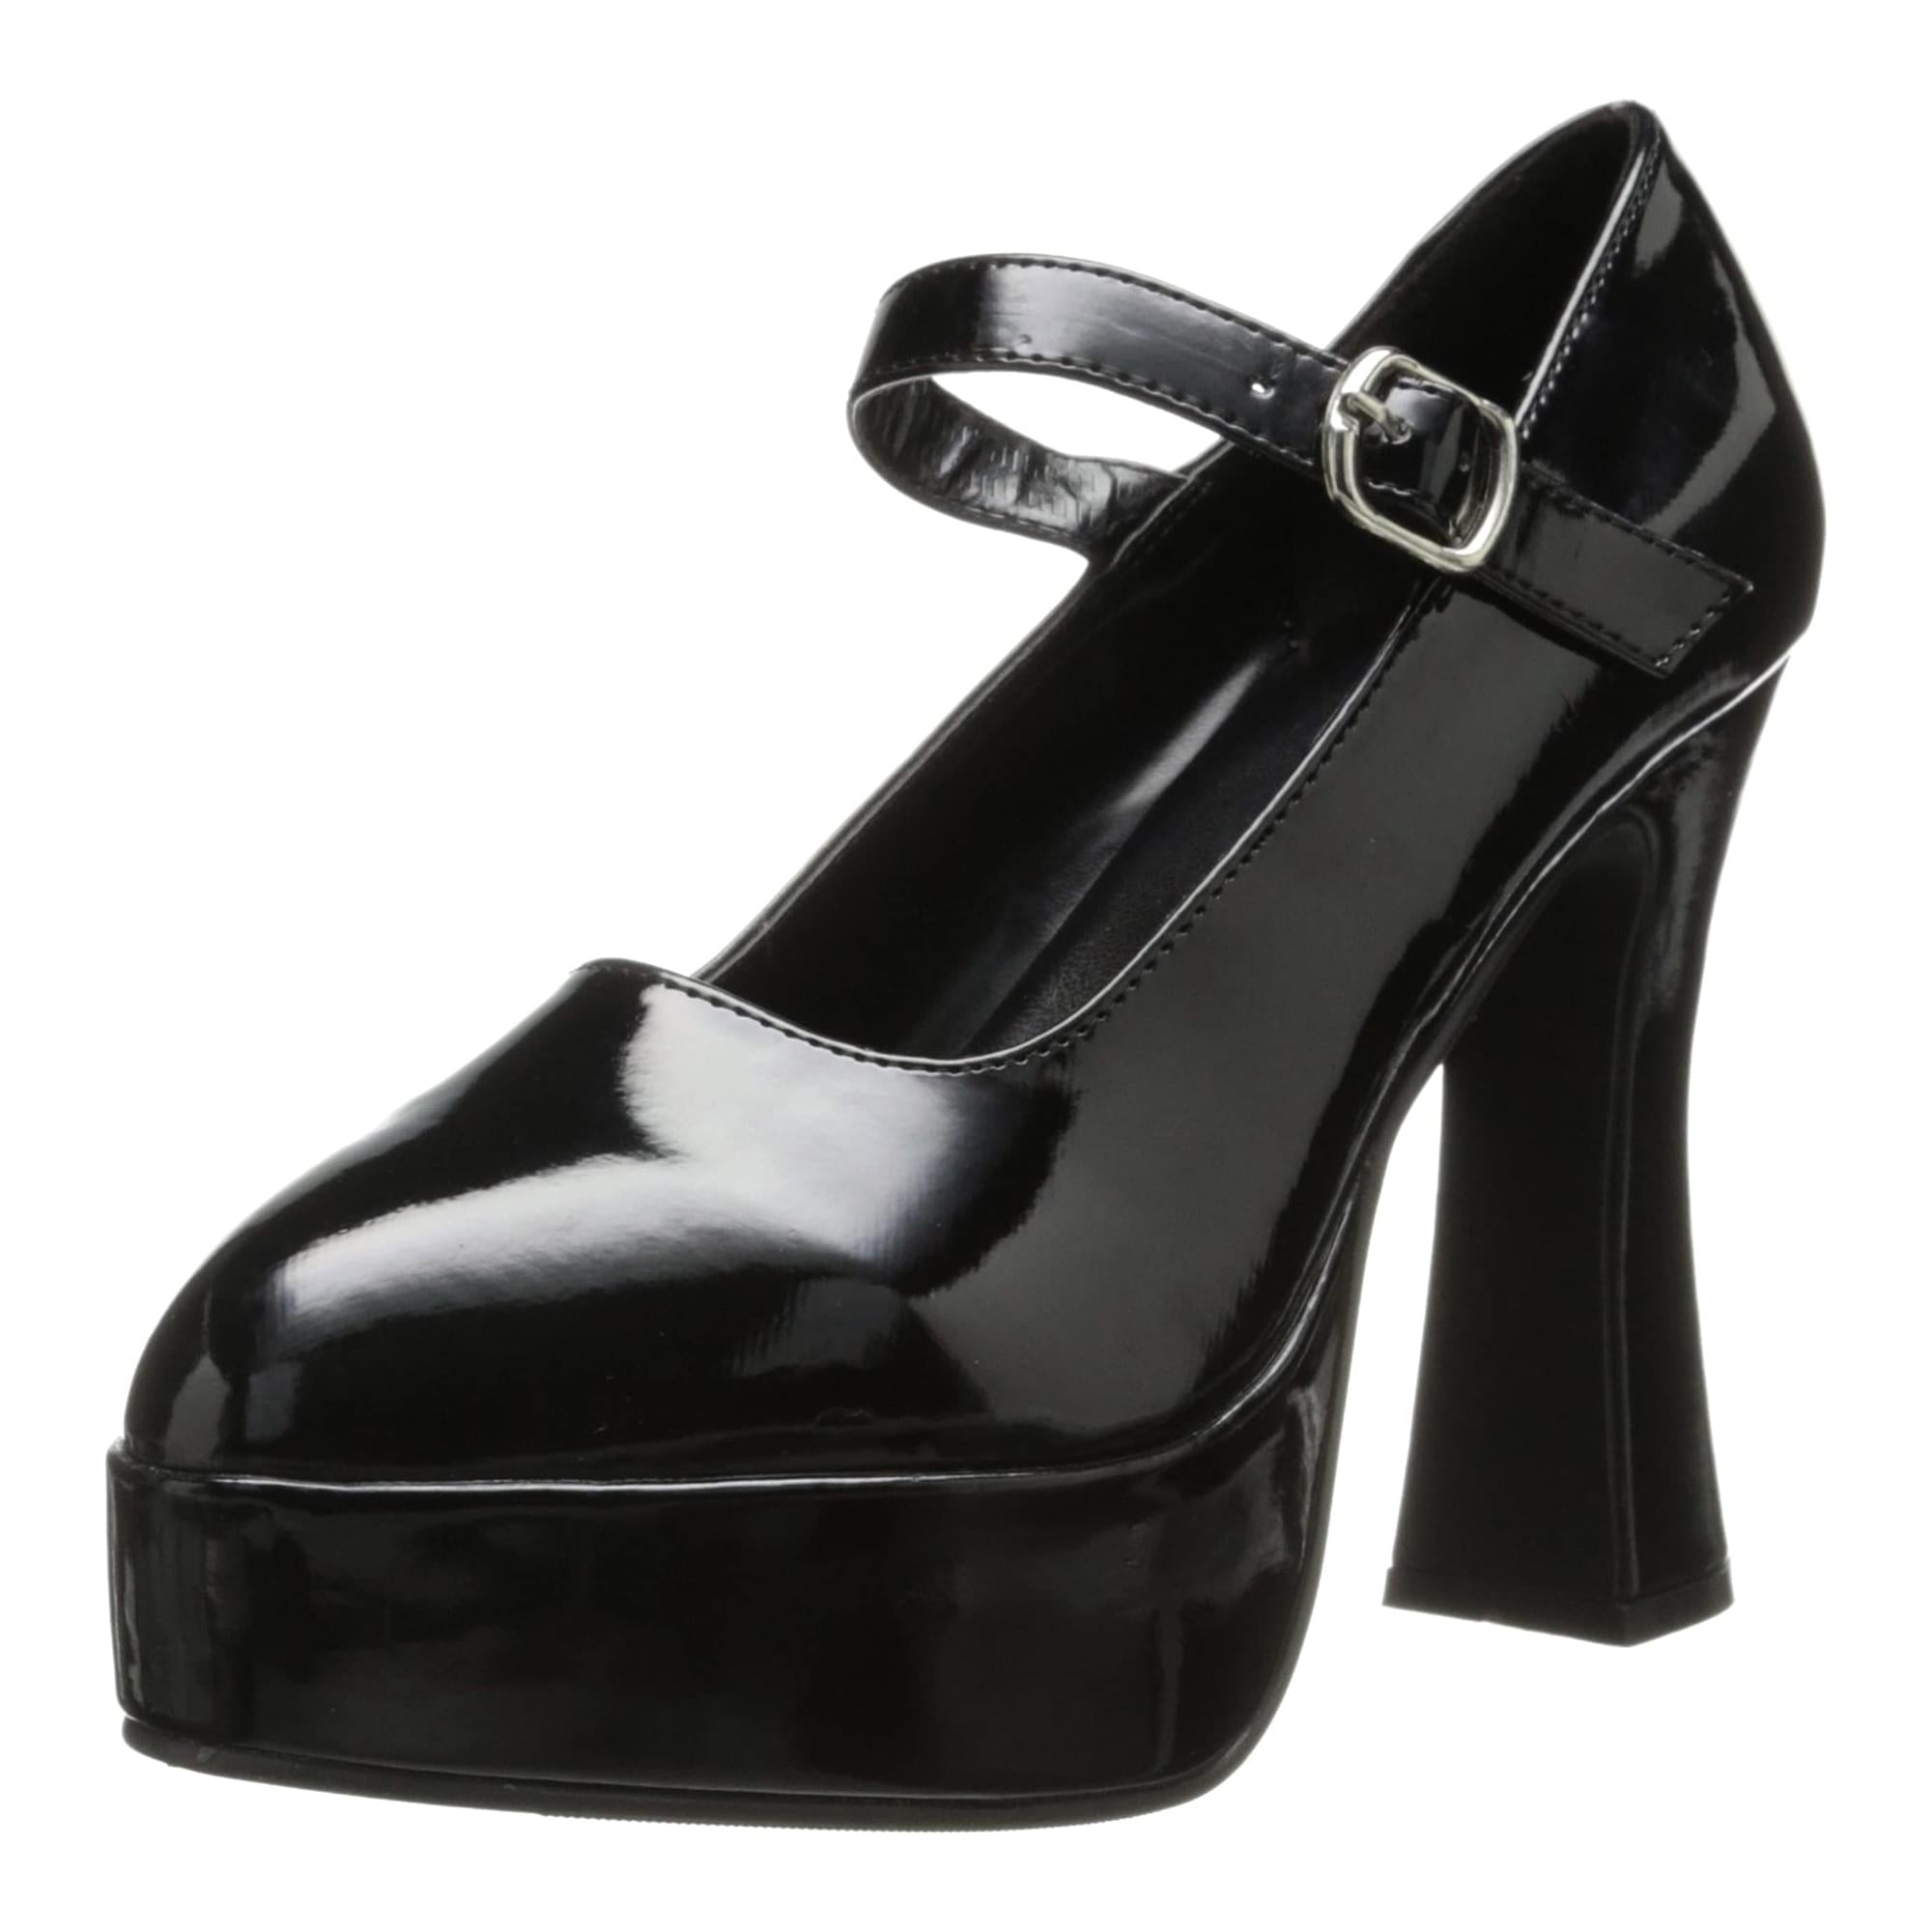 5 Chunky Heel With 1.5 Platform Black Mary Jane